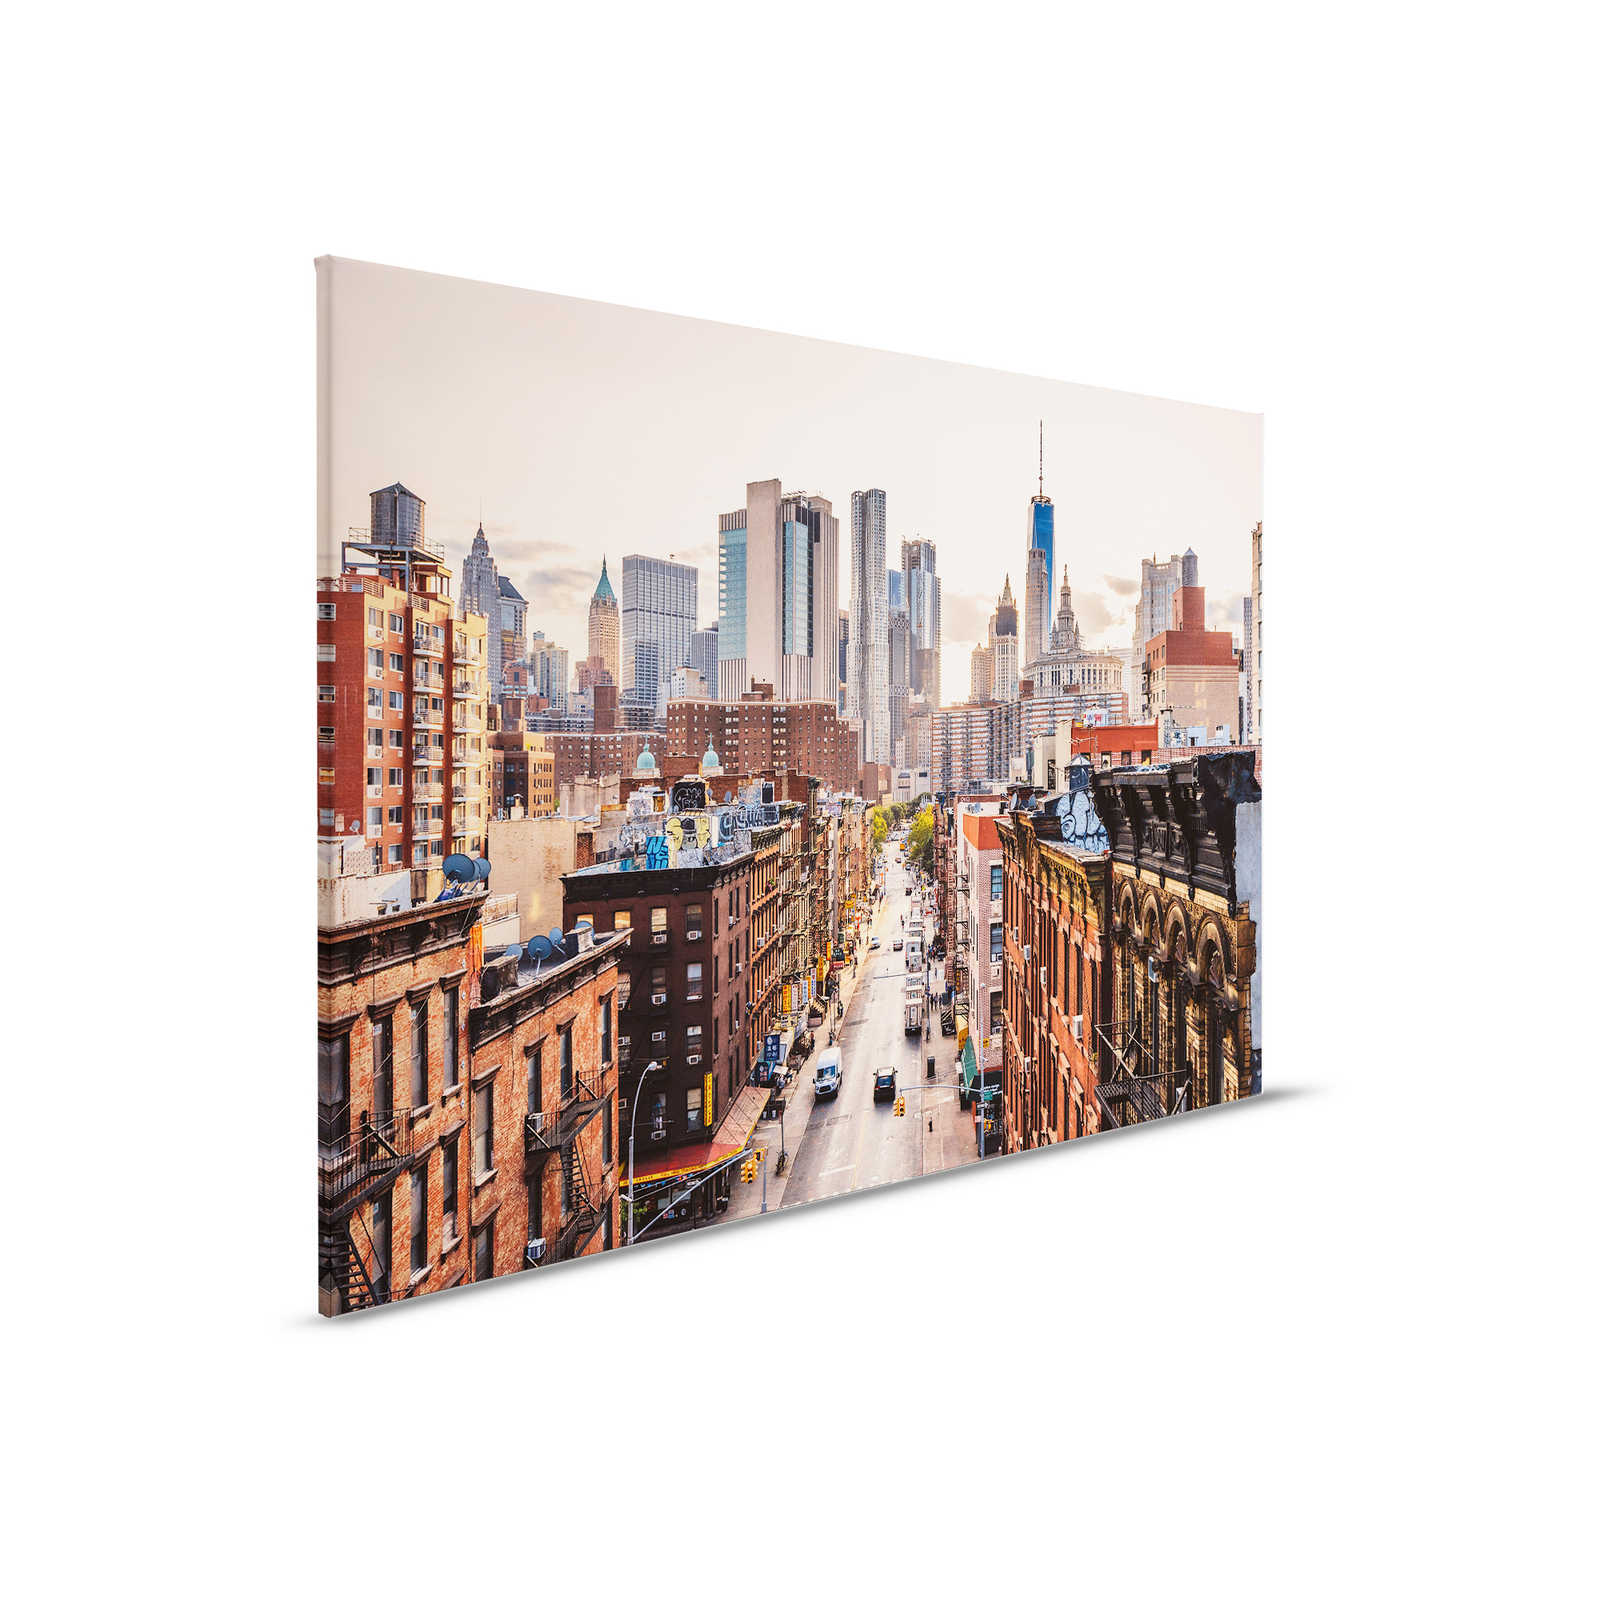         Skyline Canvas New York - 0,90 m x 0,60 m
    